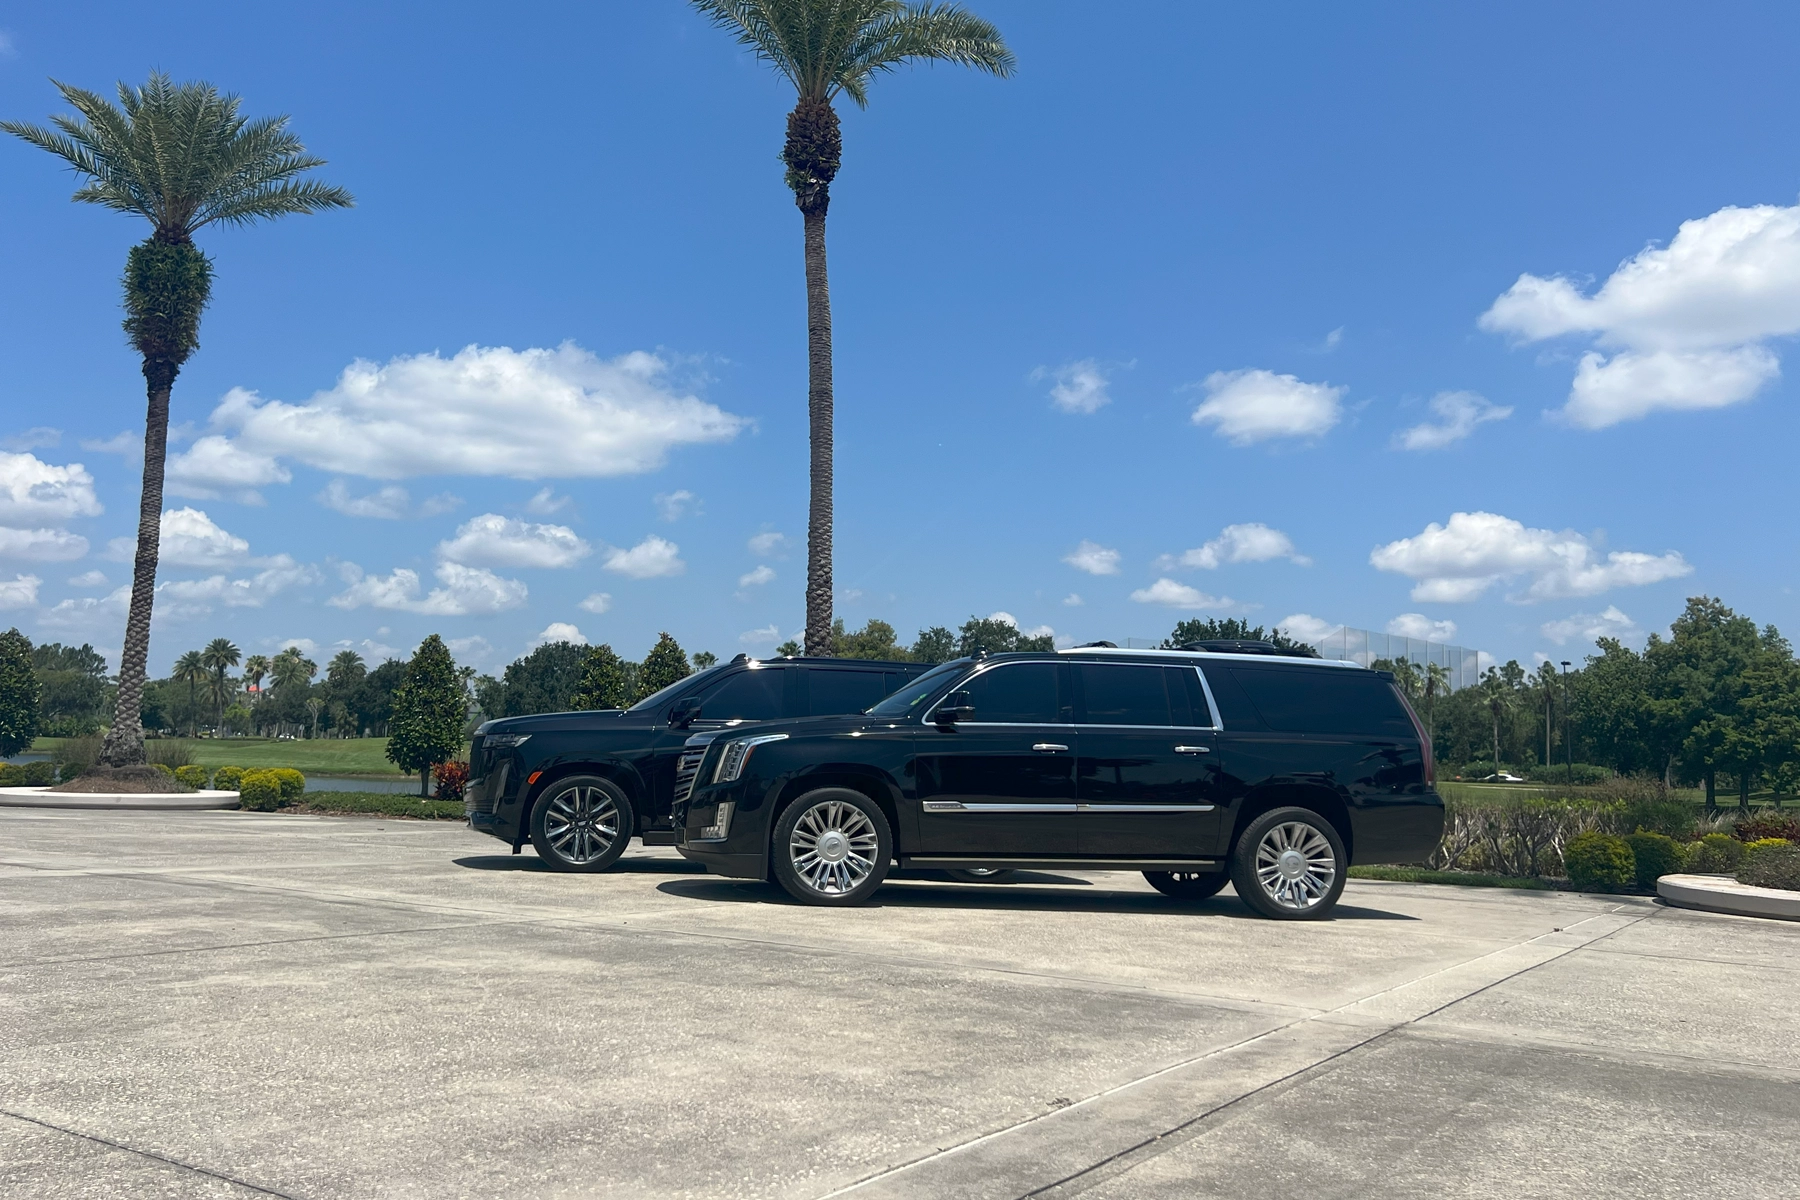 6 Passenger Luxury SUV · Orlando Airport to Disney